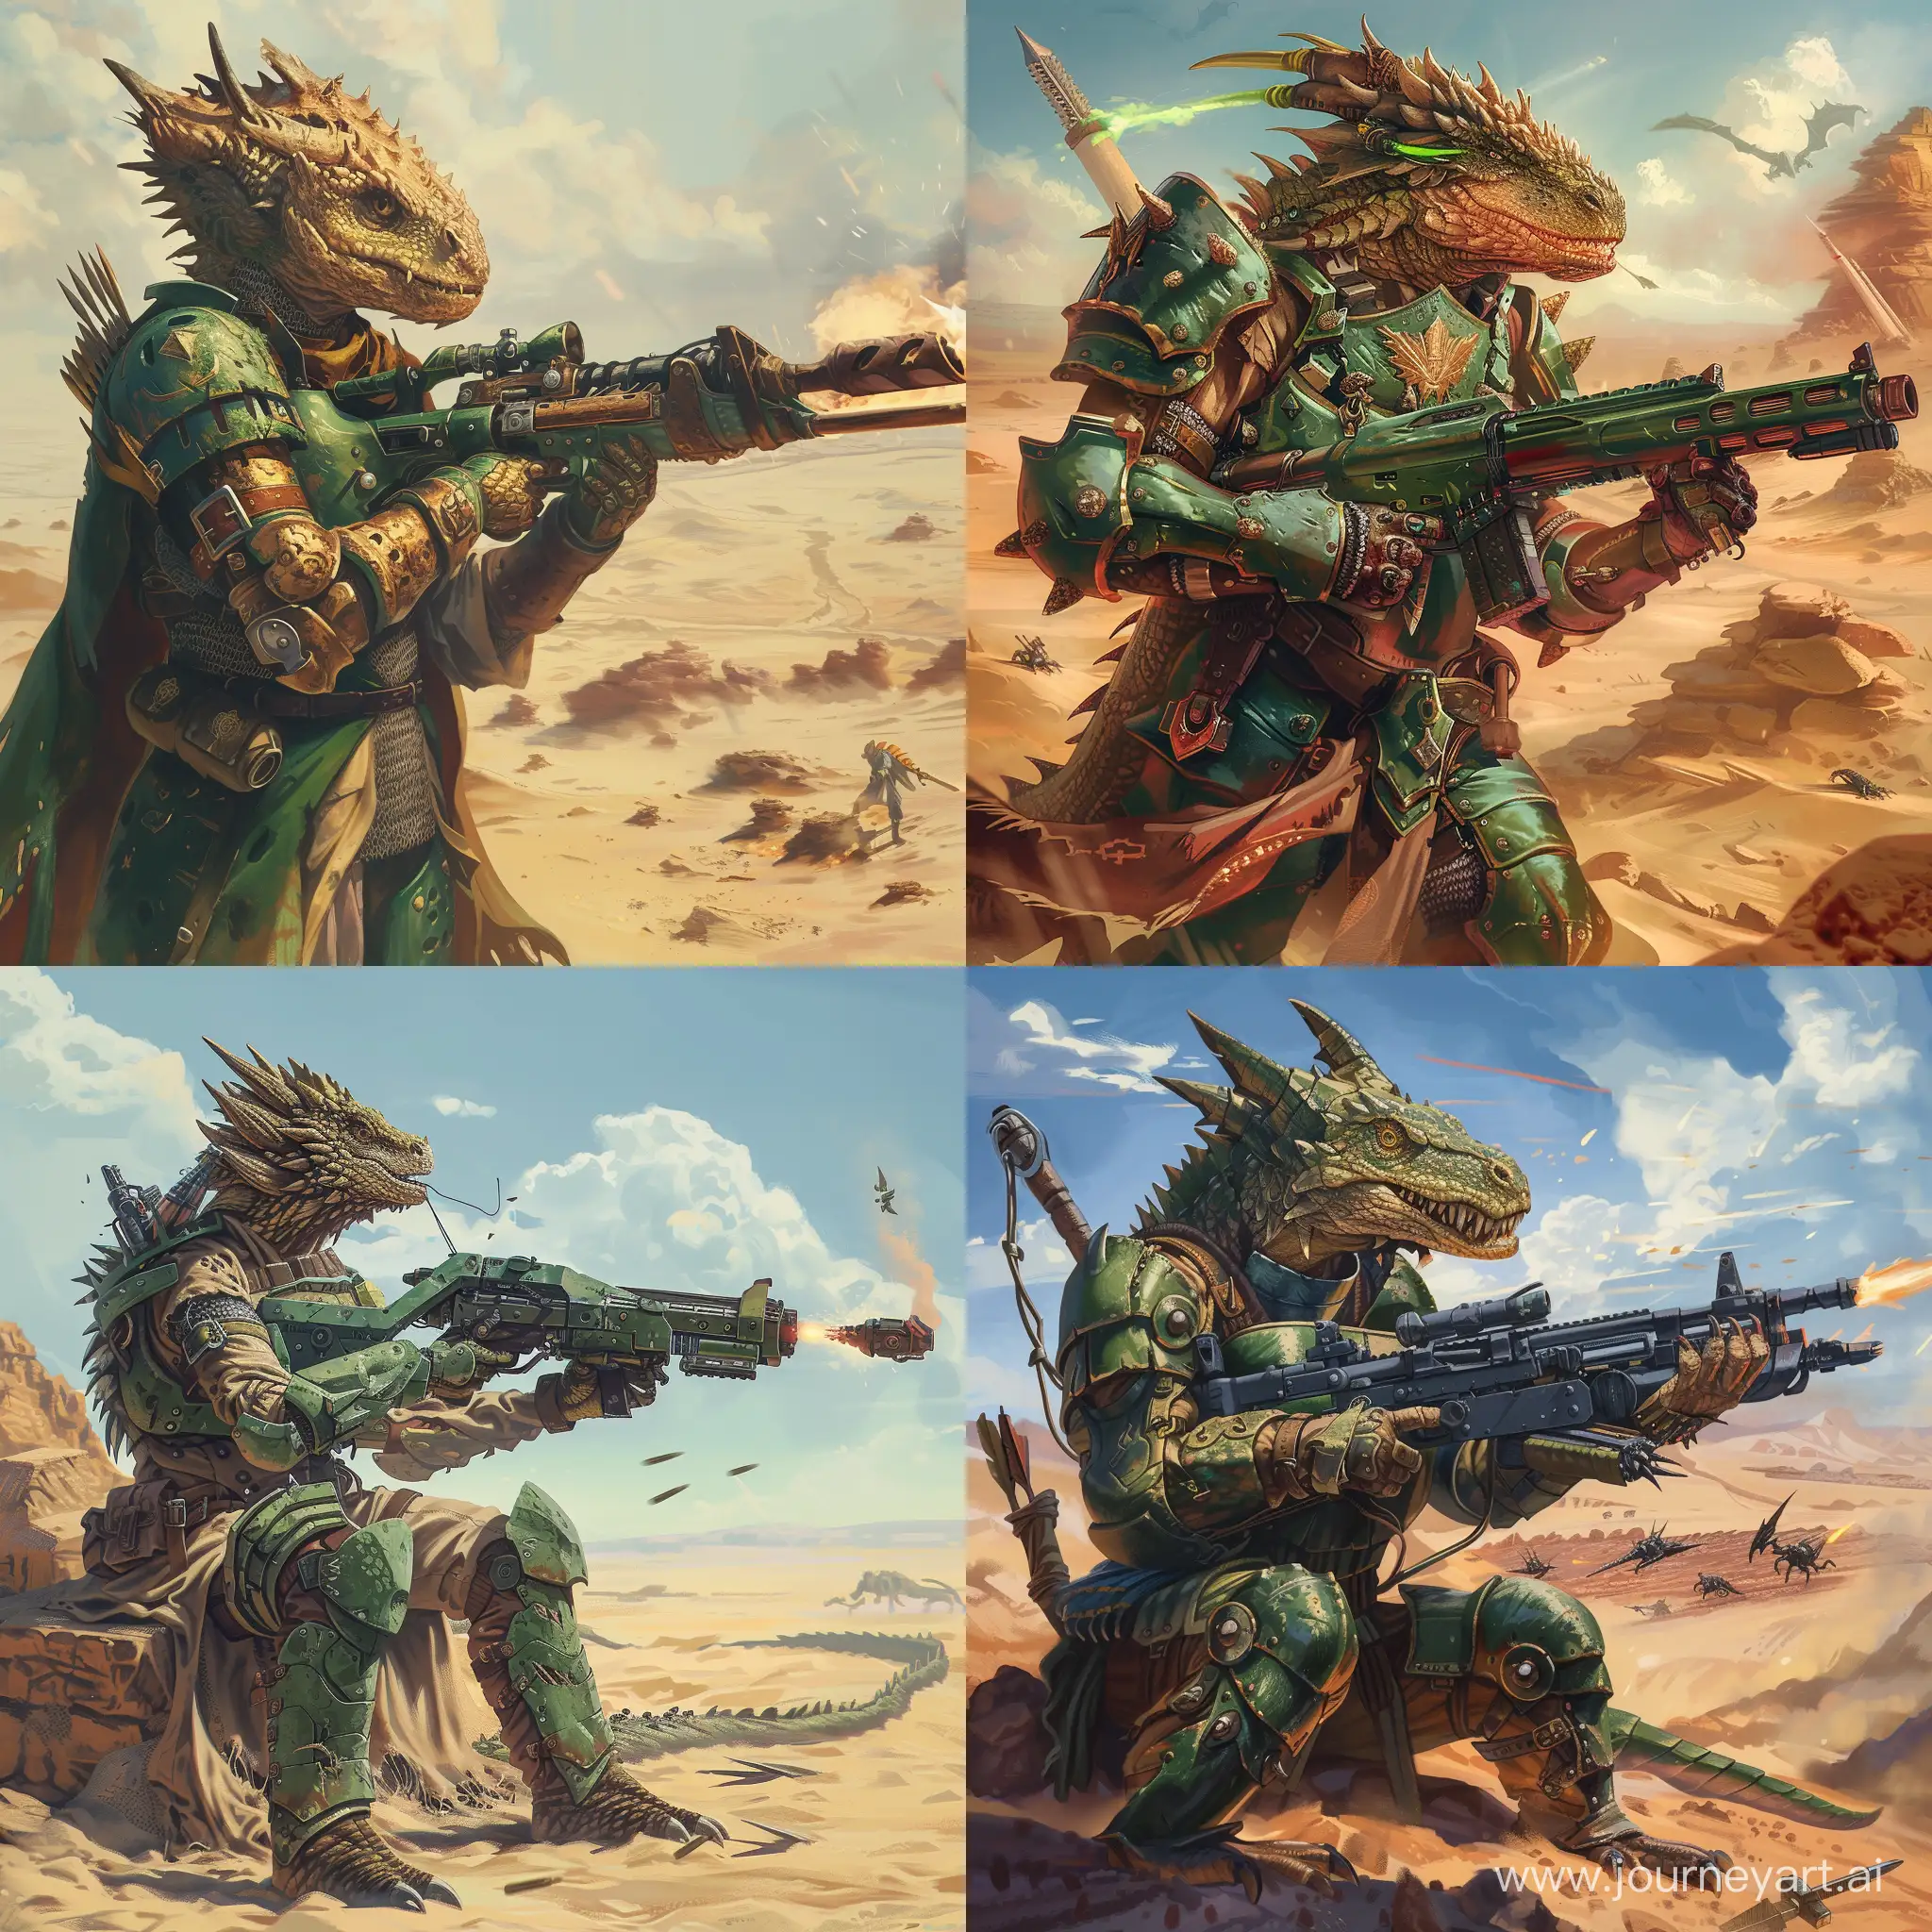 Lizard warrior with dragon head and green heavy armor on battlefields use prototype of machine gun, medieval battle, concept art, dessert, 4k